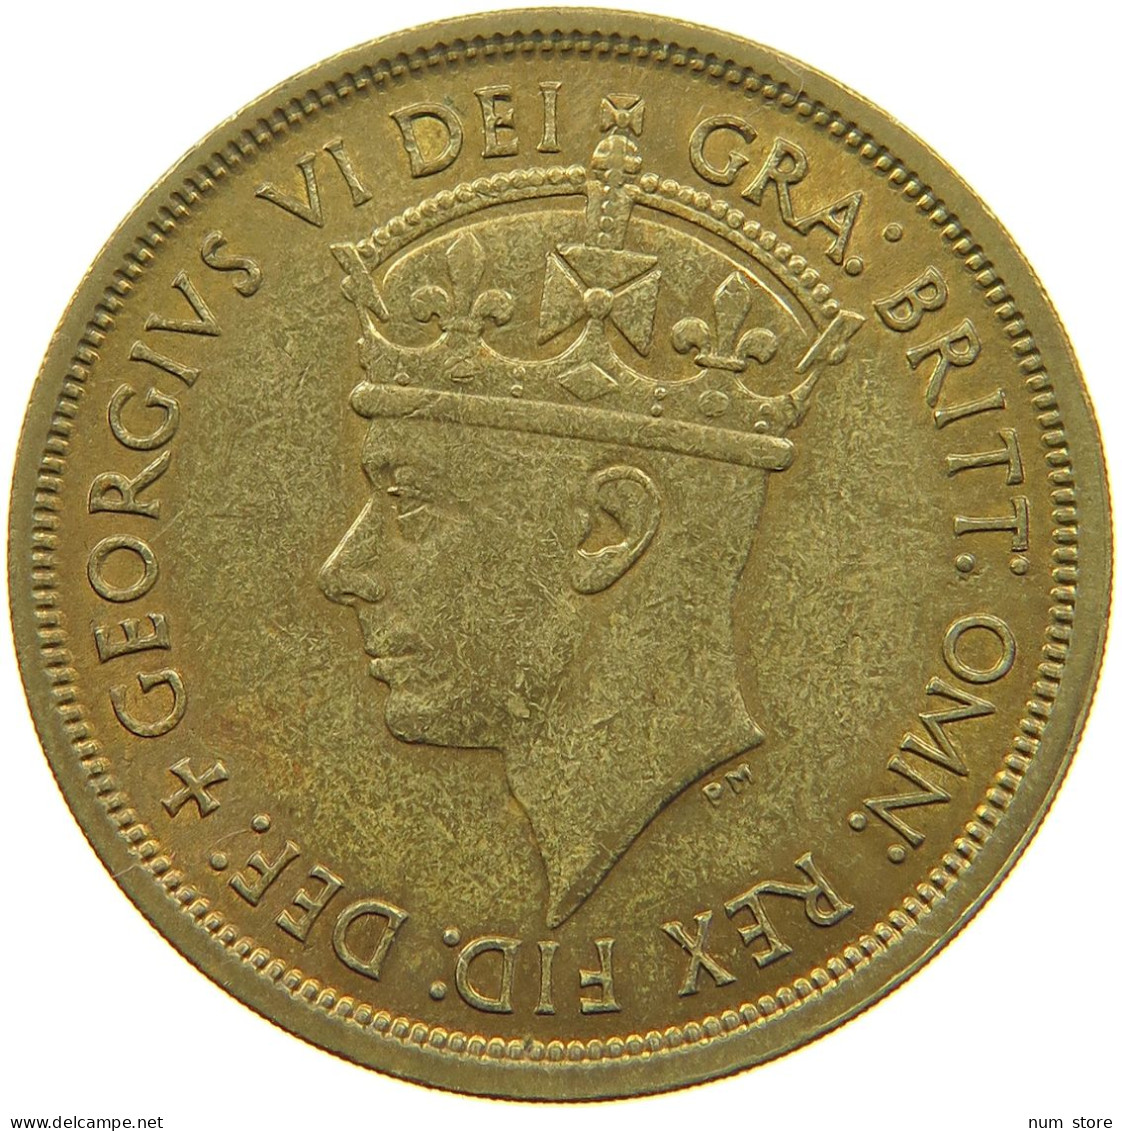 WEST AFRICA 2 SHILLINGS 1951 H George VI. (1936-1952) #t085 0067 - Colecciones